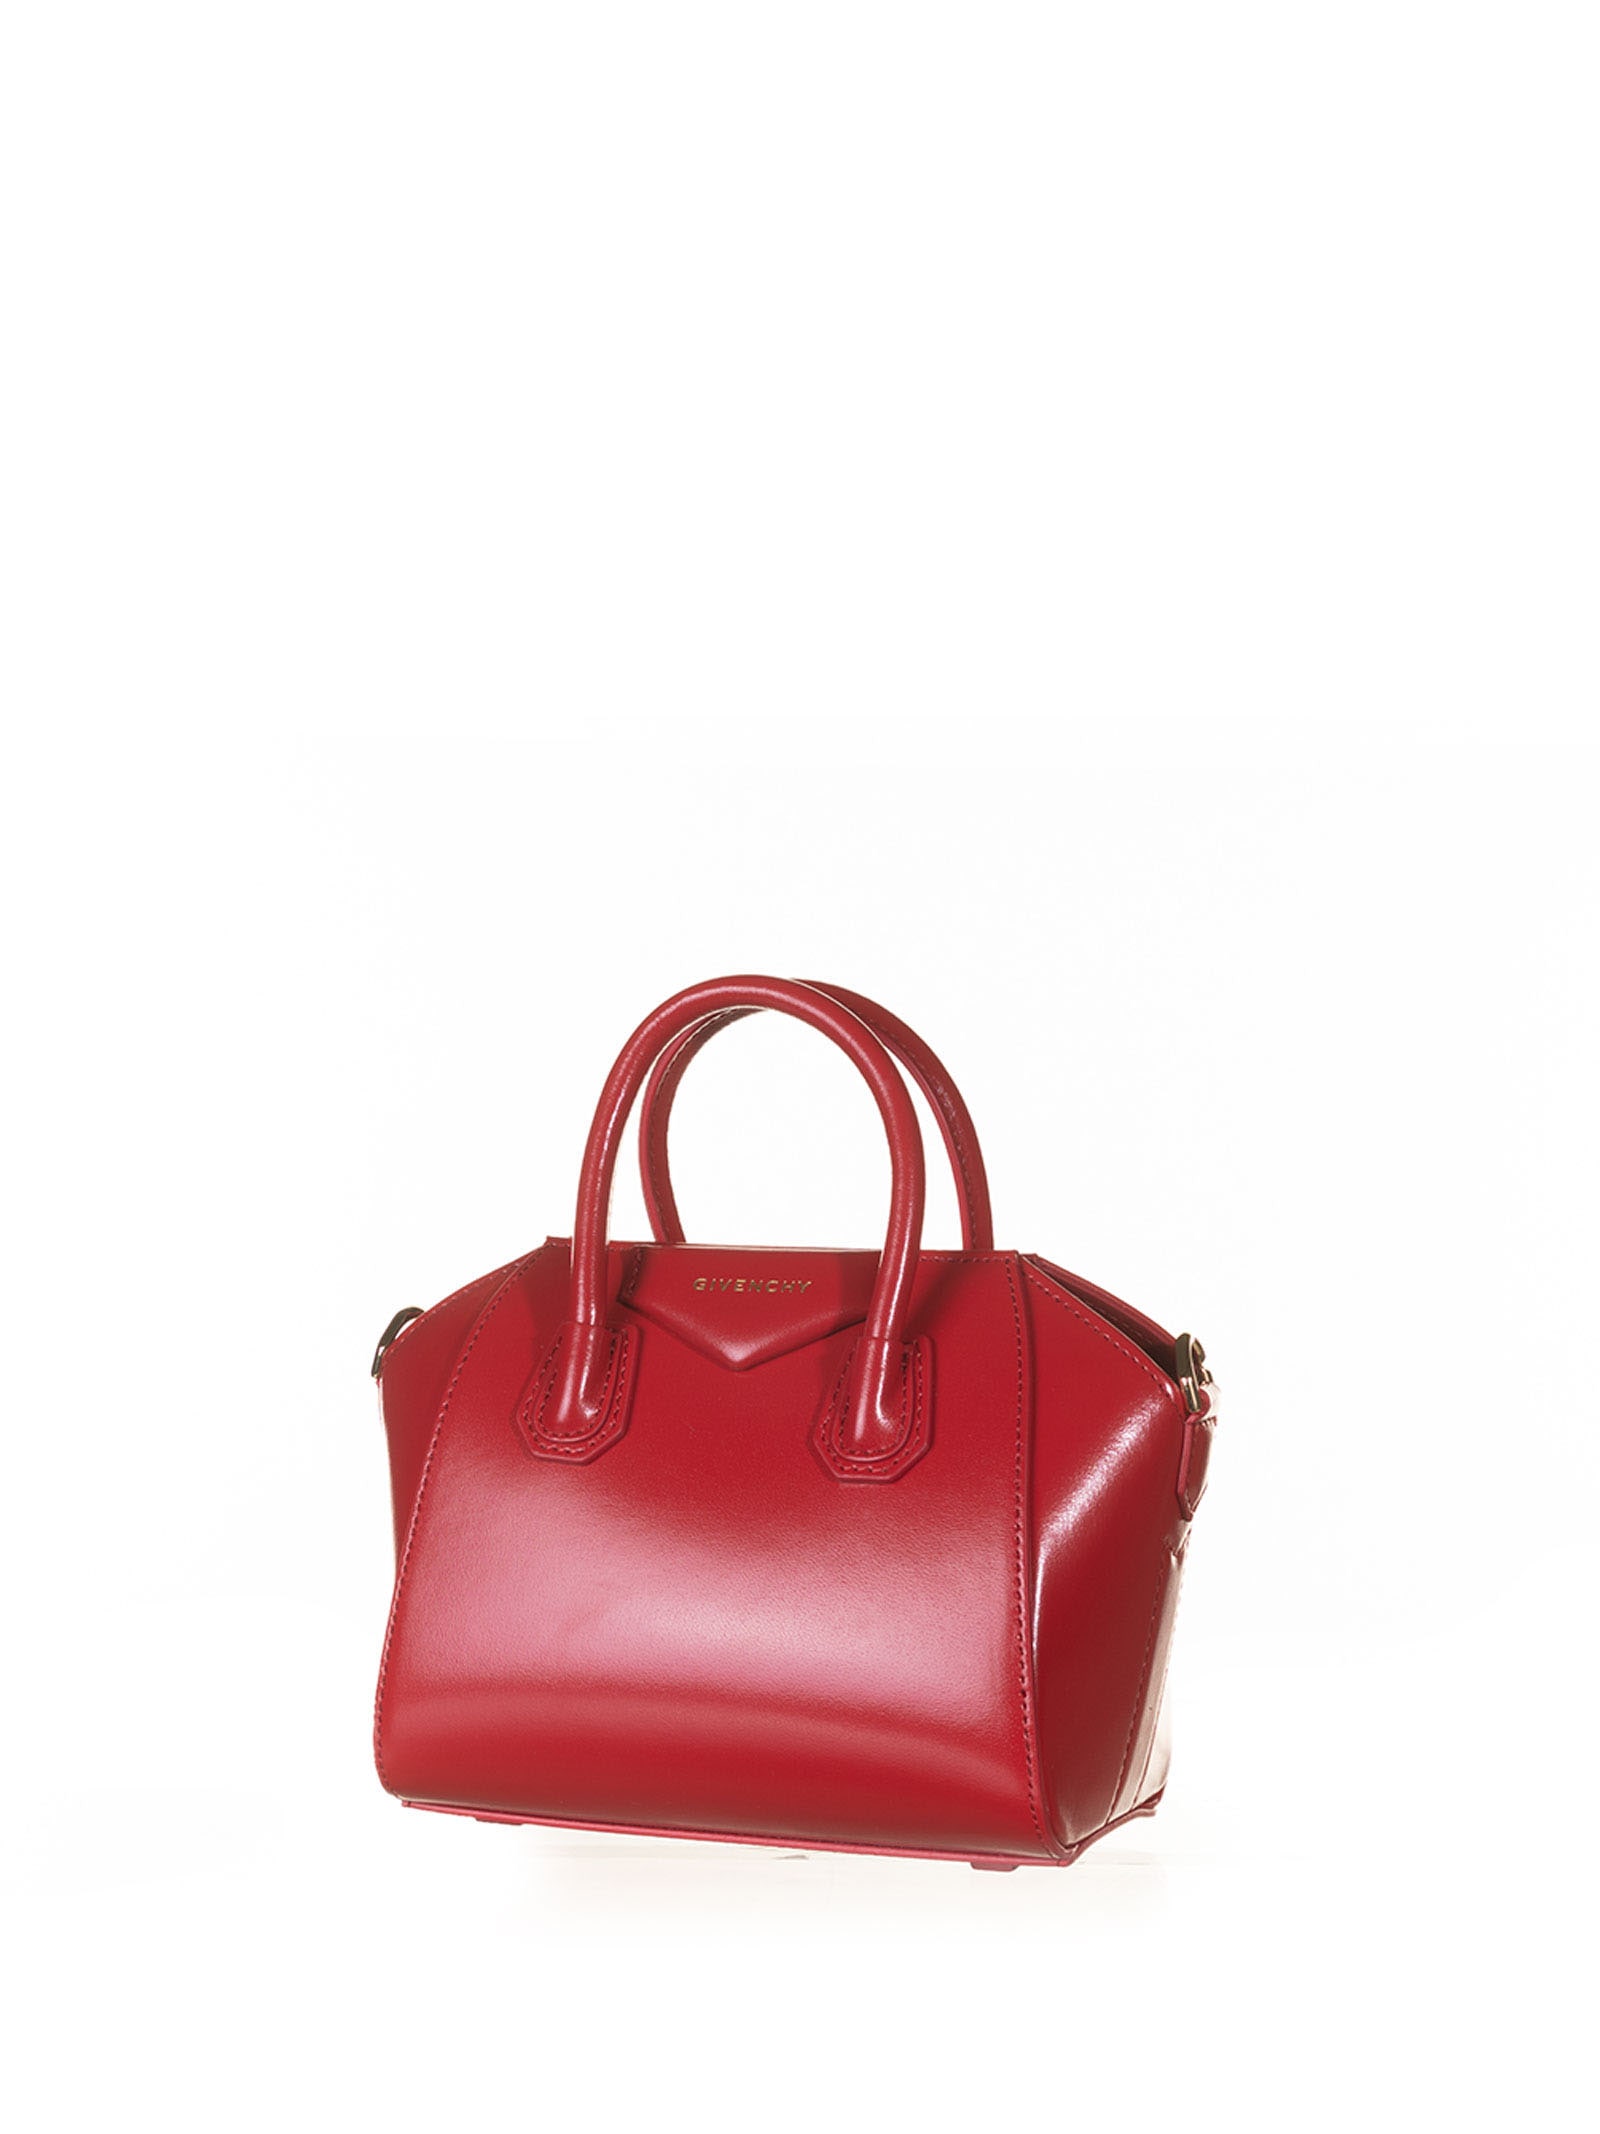 Givenchy Mini Antigona Bag In Laminated Leather Silk Pink